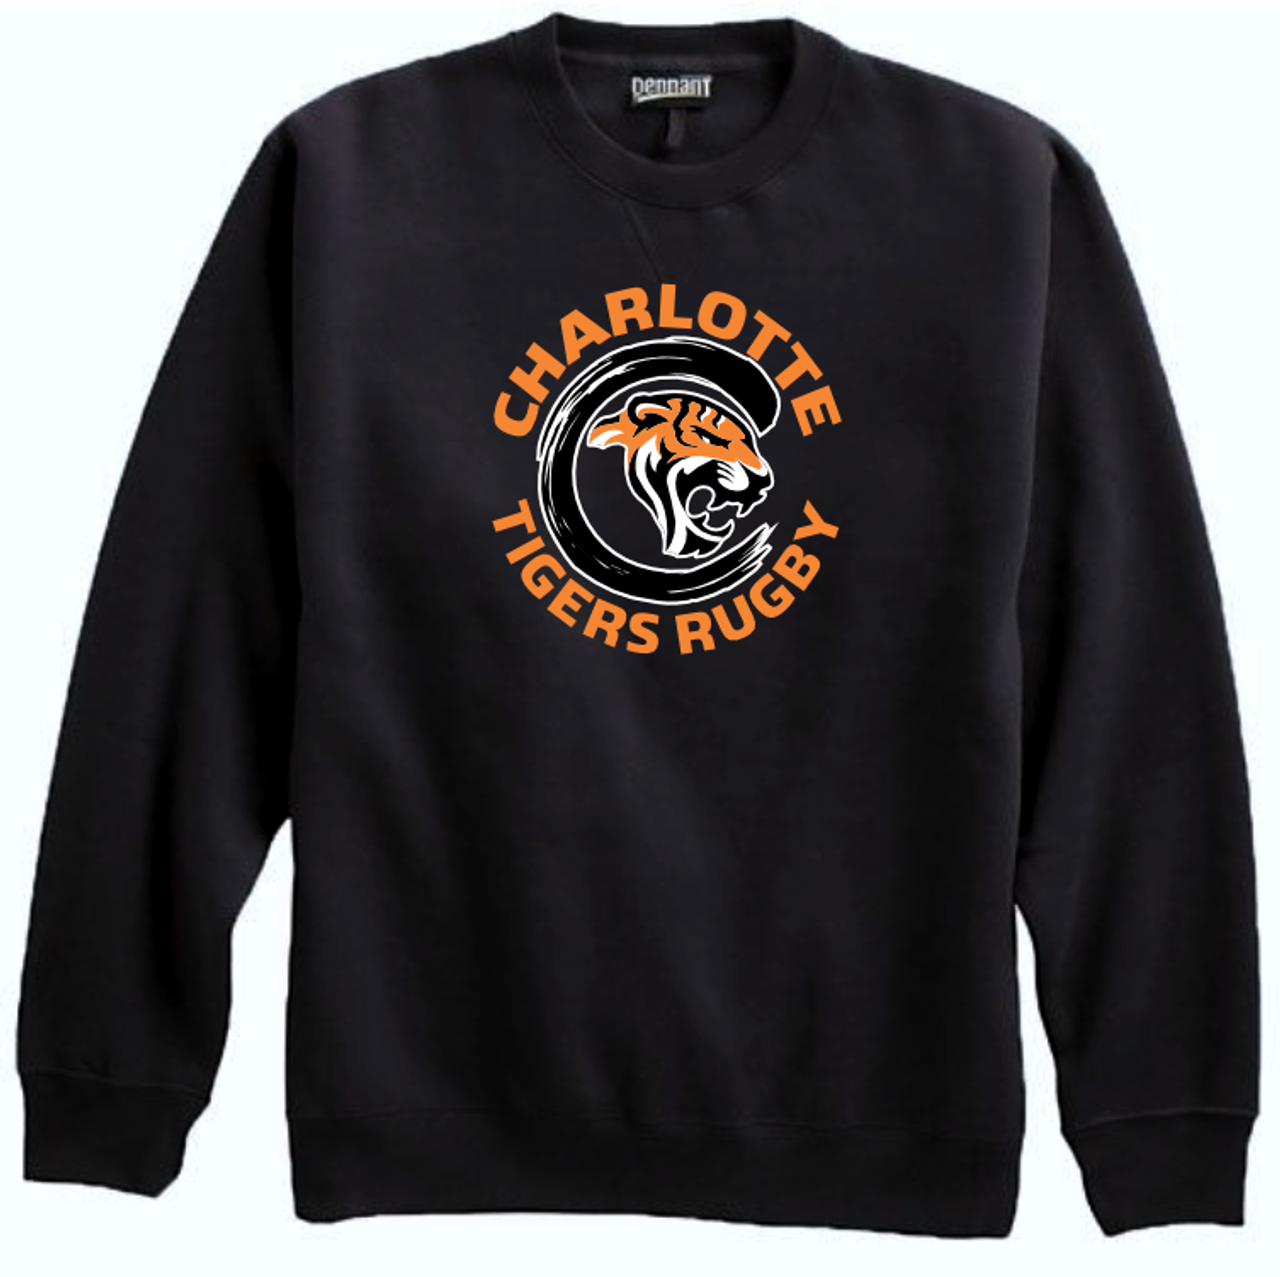 Charlotte Tigers Crewneck Sweatshirt